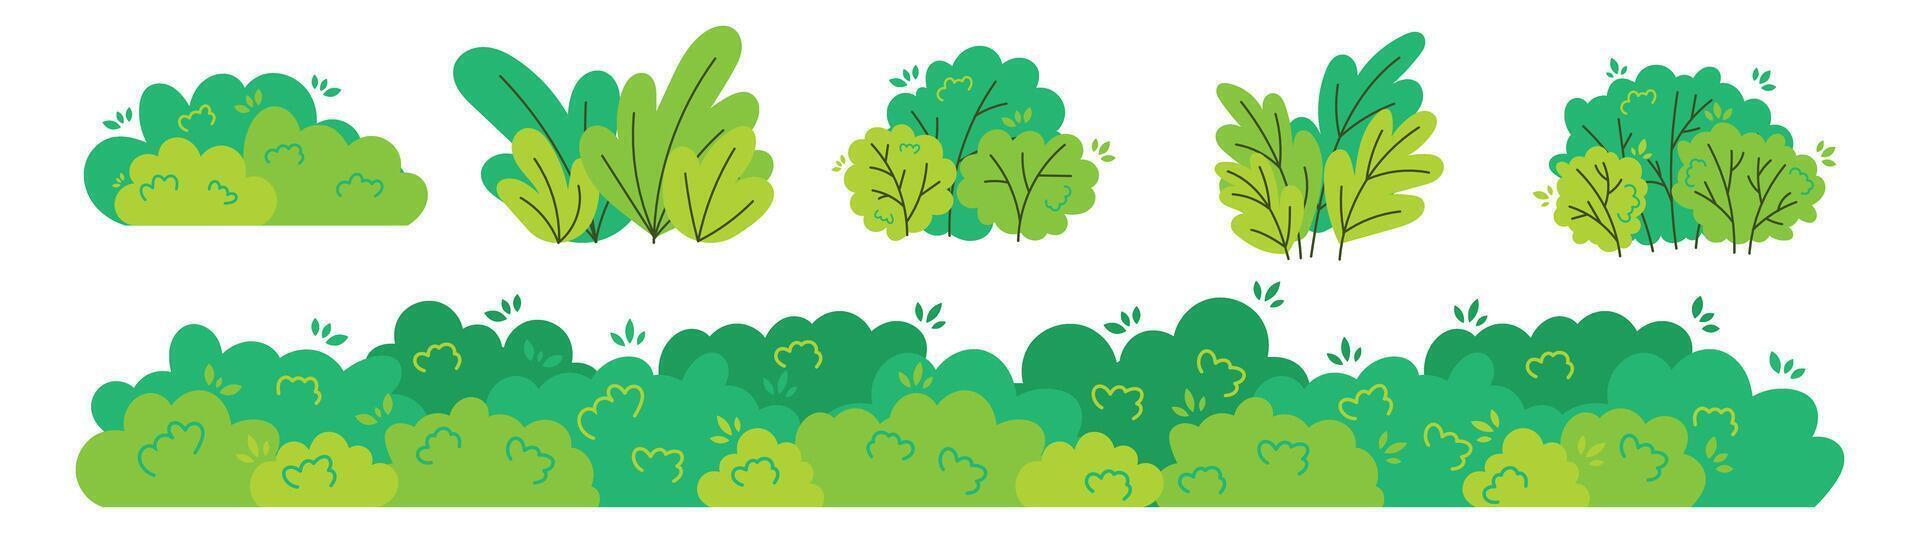 green cute bush, foliage leaves bush bundle vector